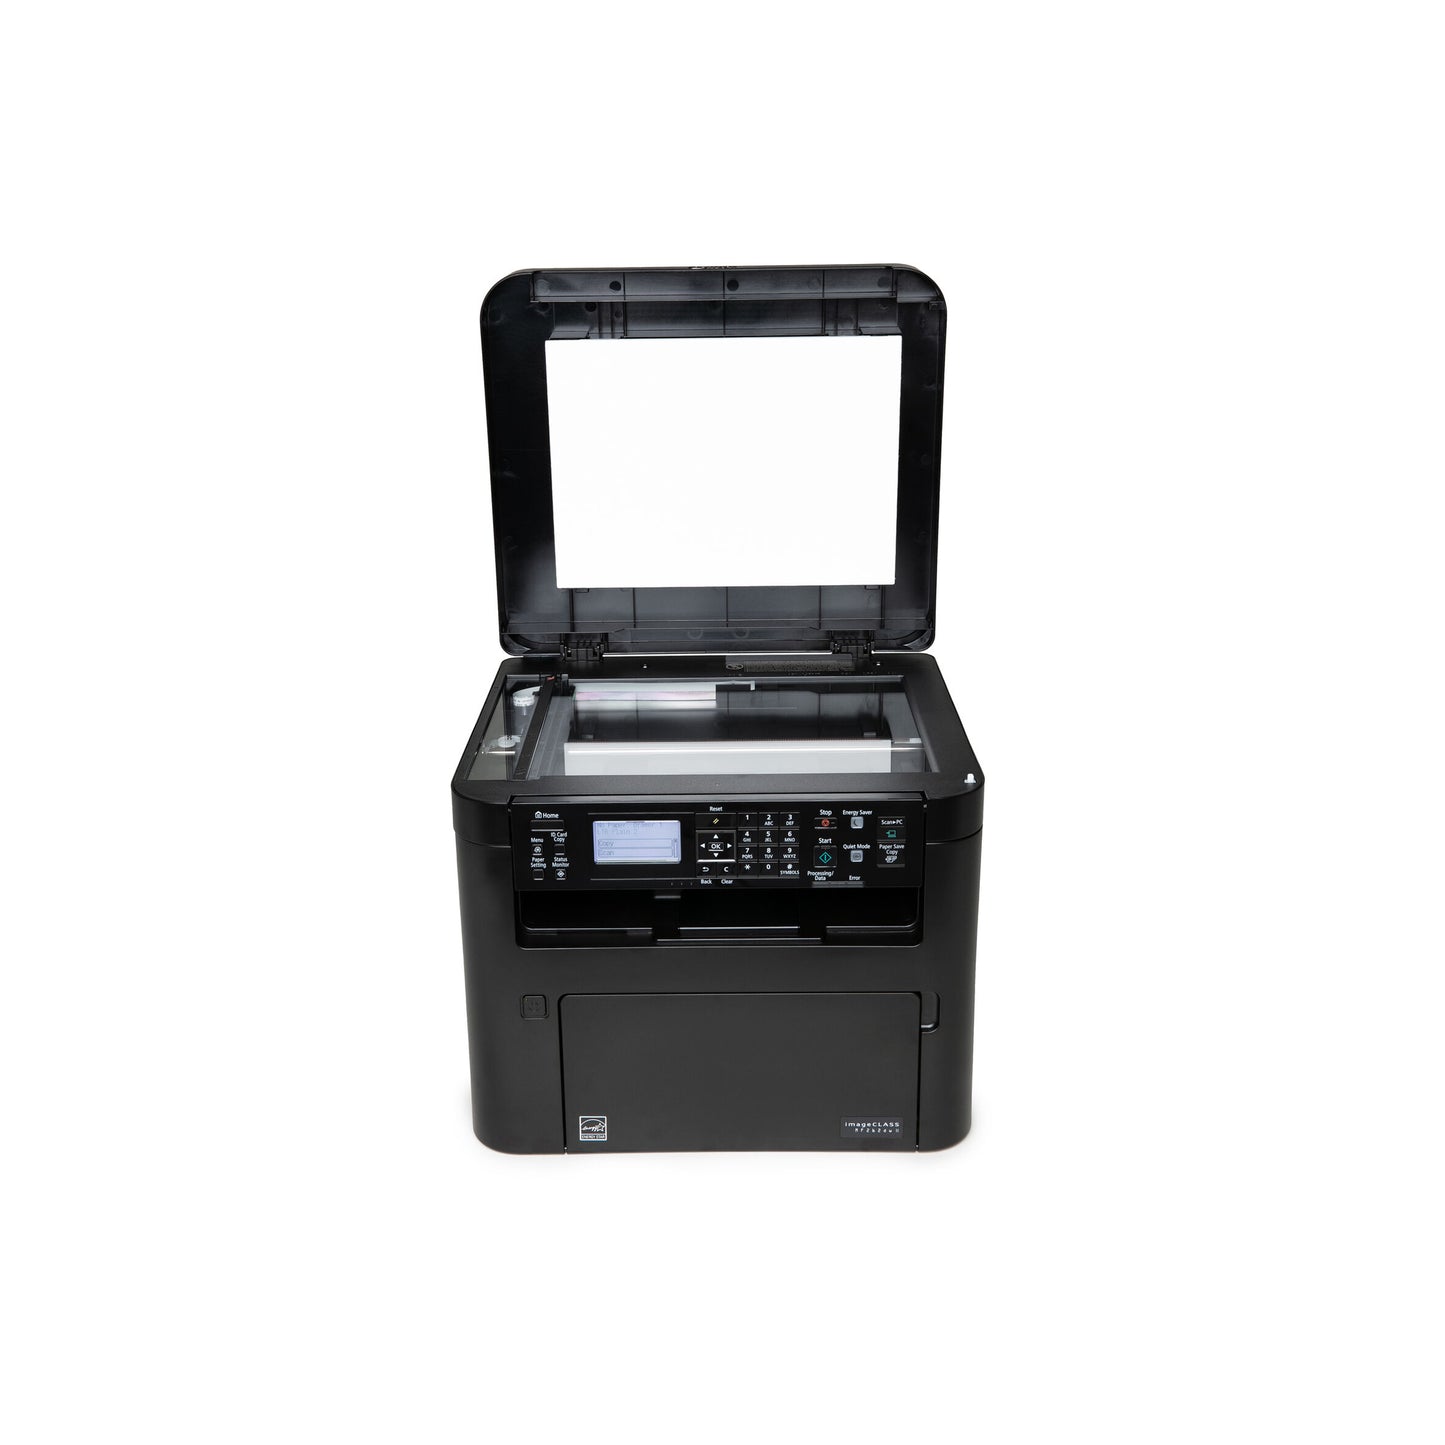 Canon imageCLASS MF262dw II - Wireless Monochrome Laser Printer with Print, Copy and Scan, Black